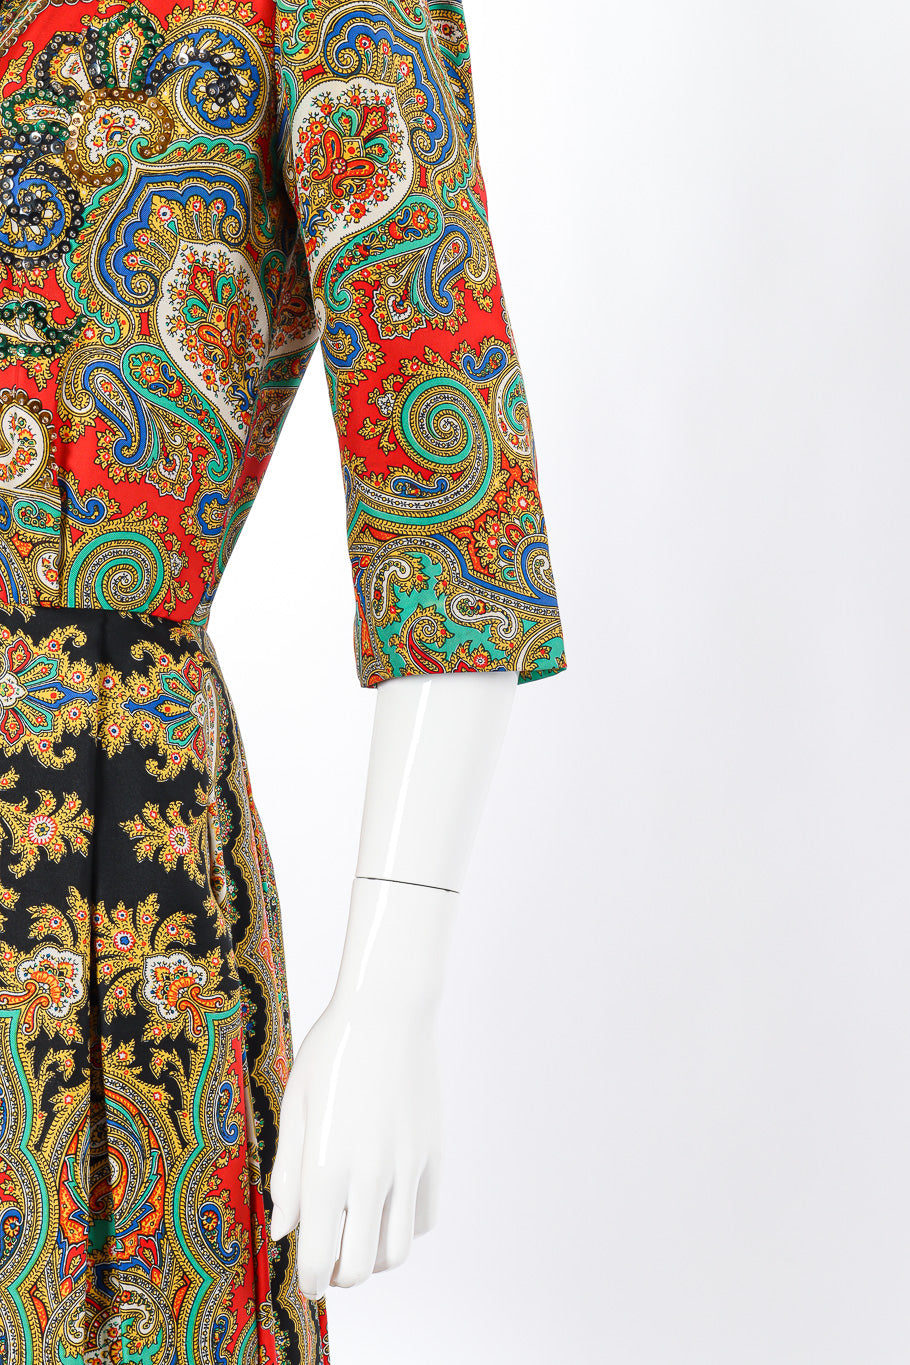 Vintage Holly Hoelscher Silk Paisley Shirt Dress front sleeve on mannequin @Recessla